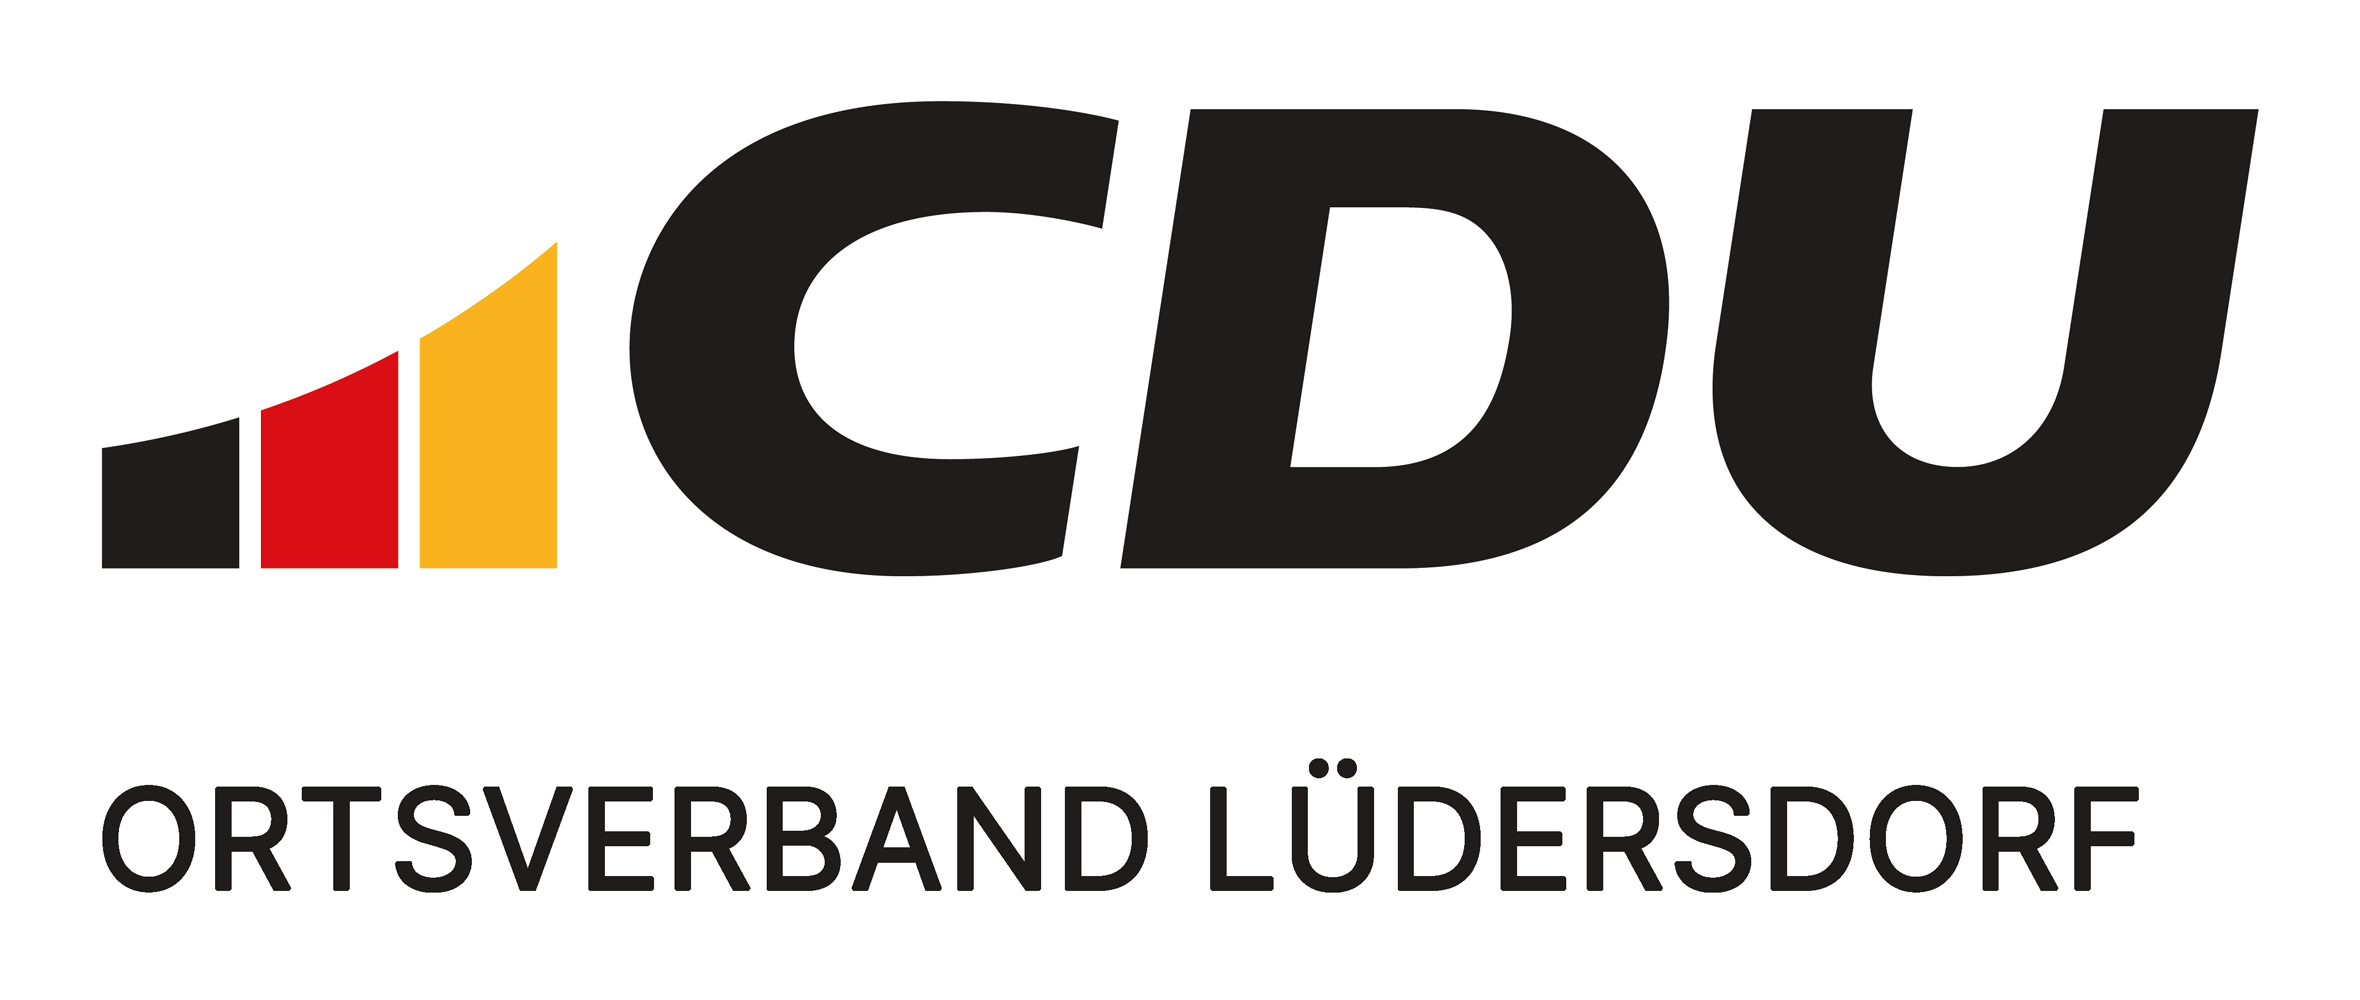 CDU-Ortsverband Lüdersdorf